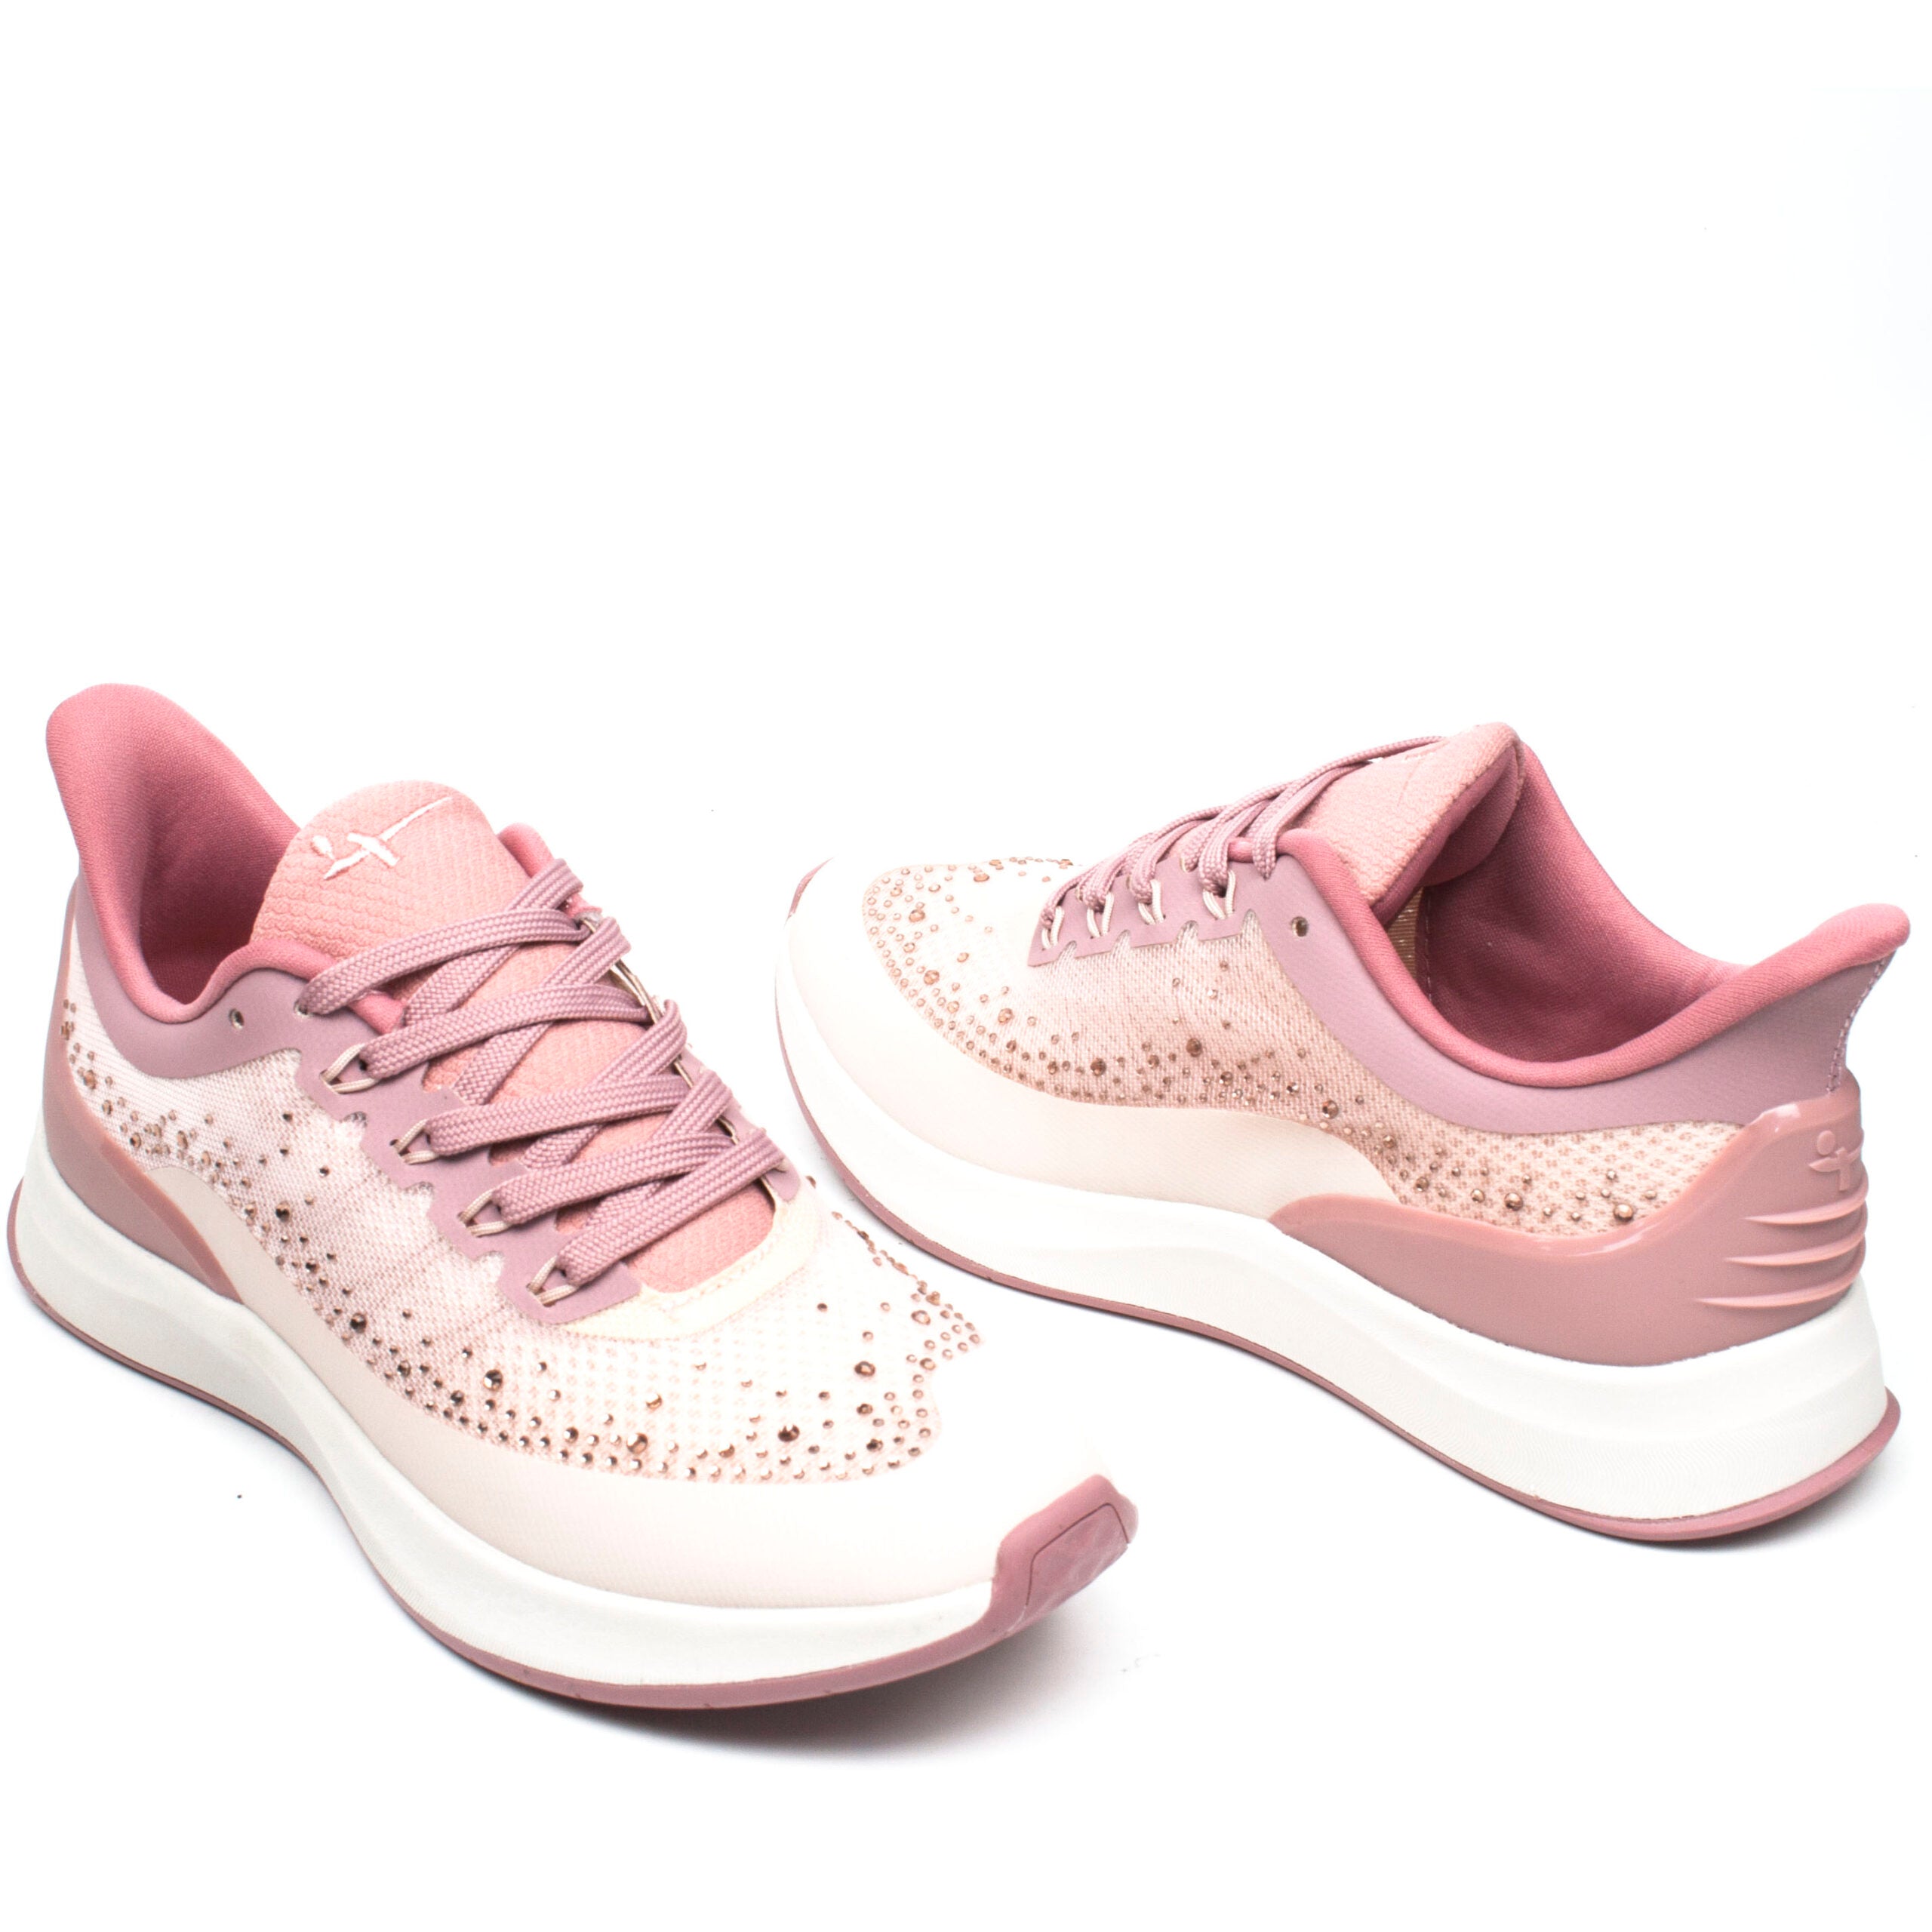 Tamaris pantofi dama sport Footbed roz ID1862-ROZ